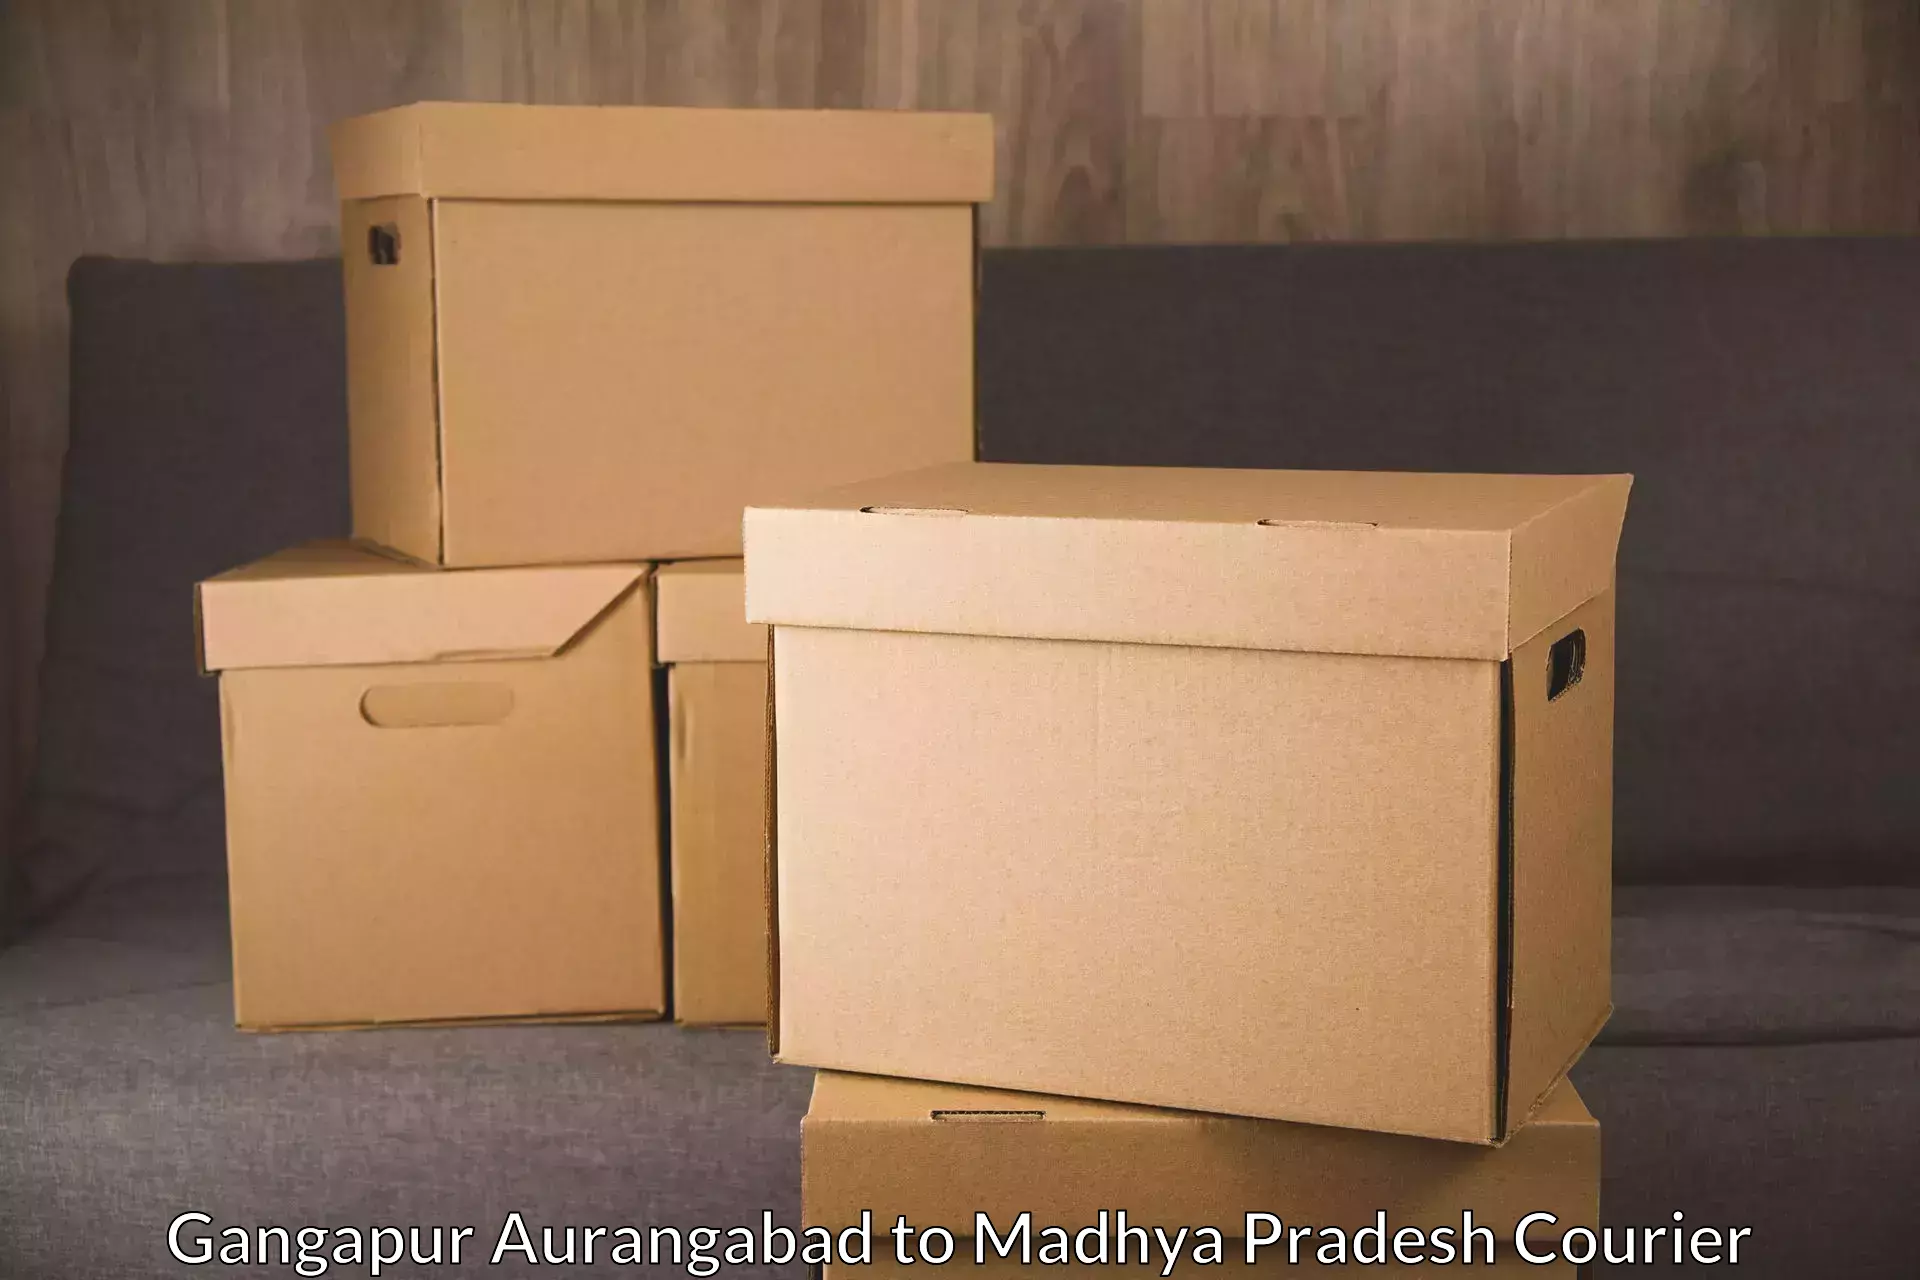 User-friendly courier app Gangapur Aurangabad to Depalpur